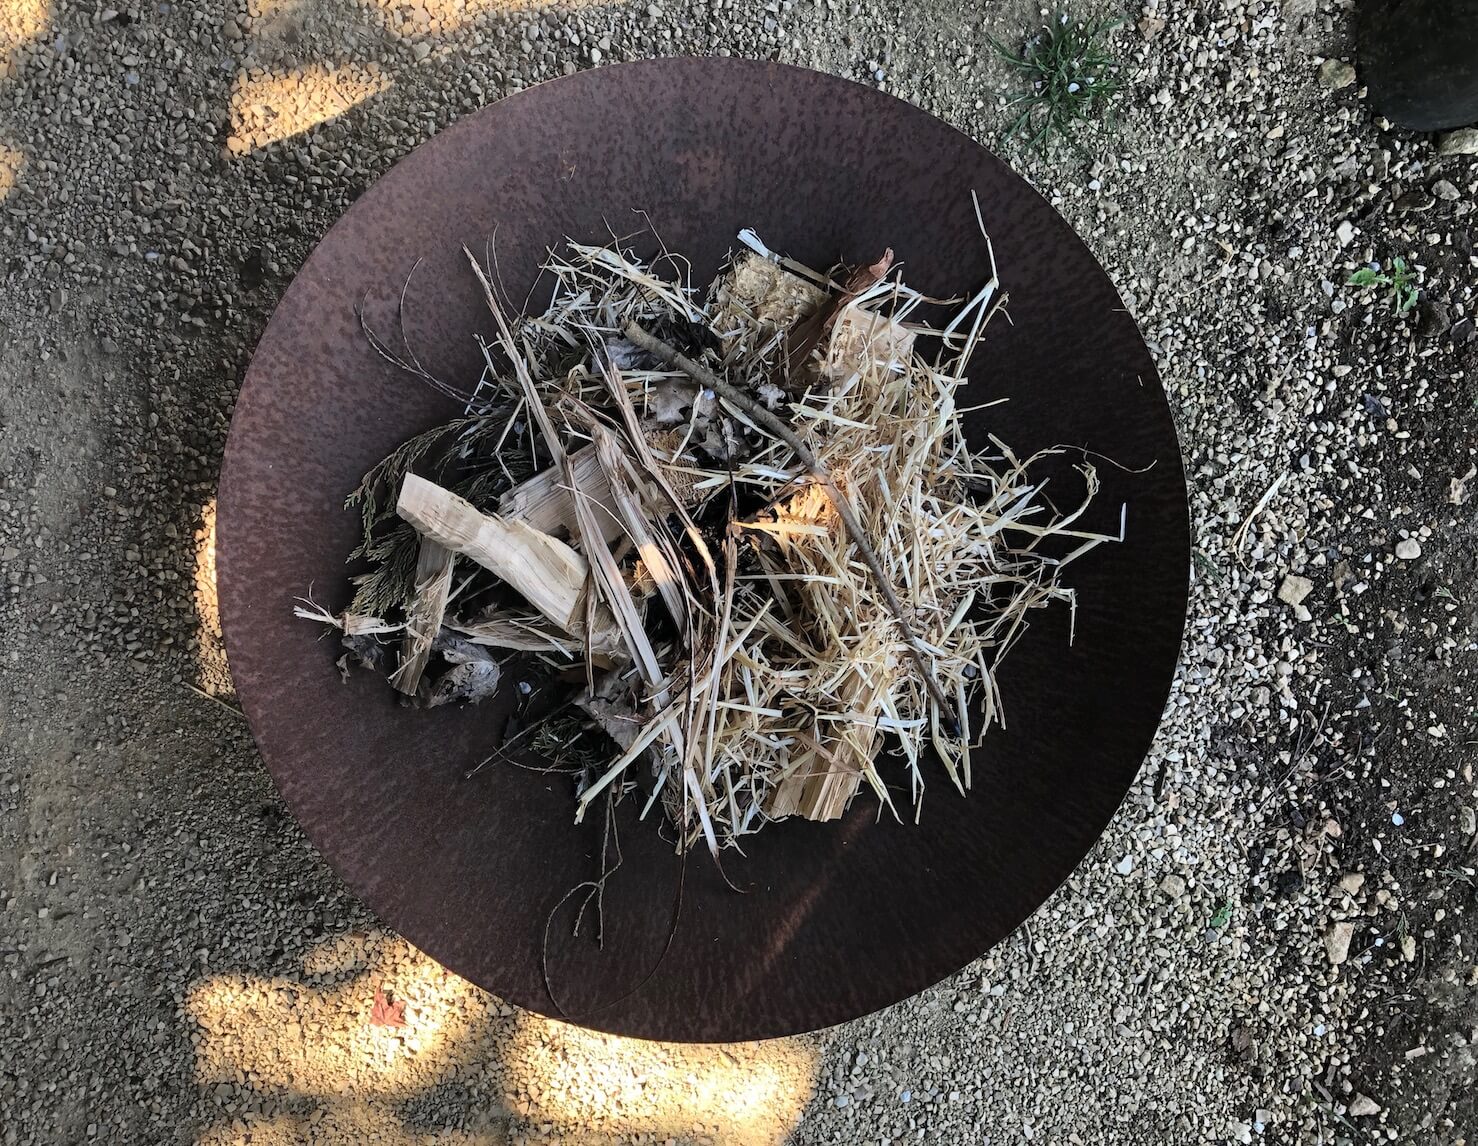 harvest time fire pit bowl with natural kindling